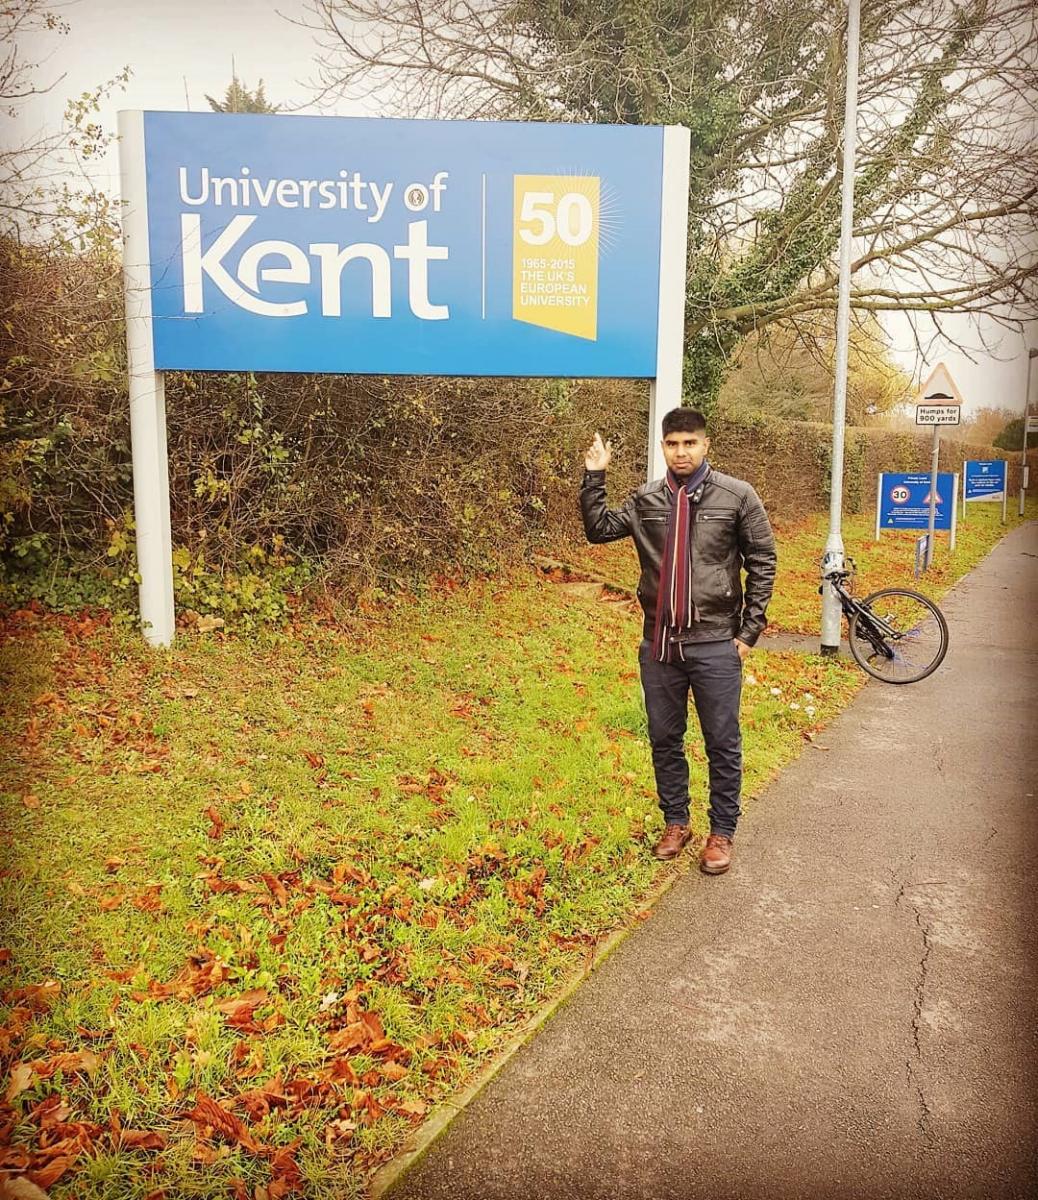 University of Kent UK (Dec – 2018)